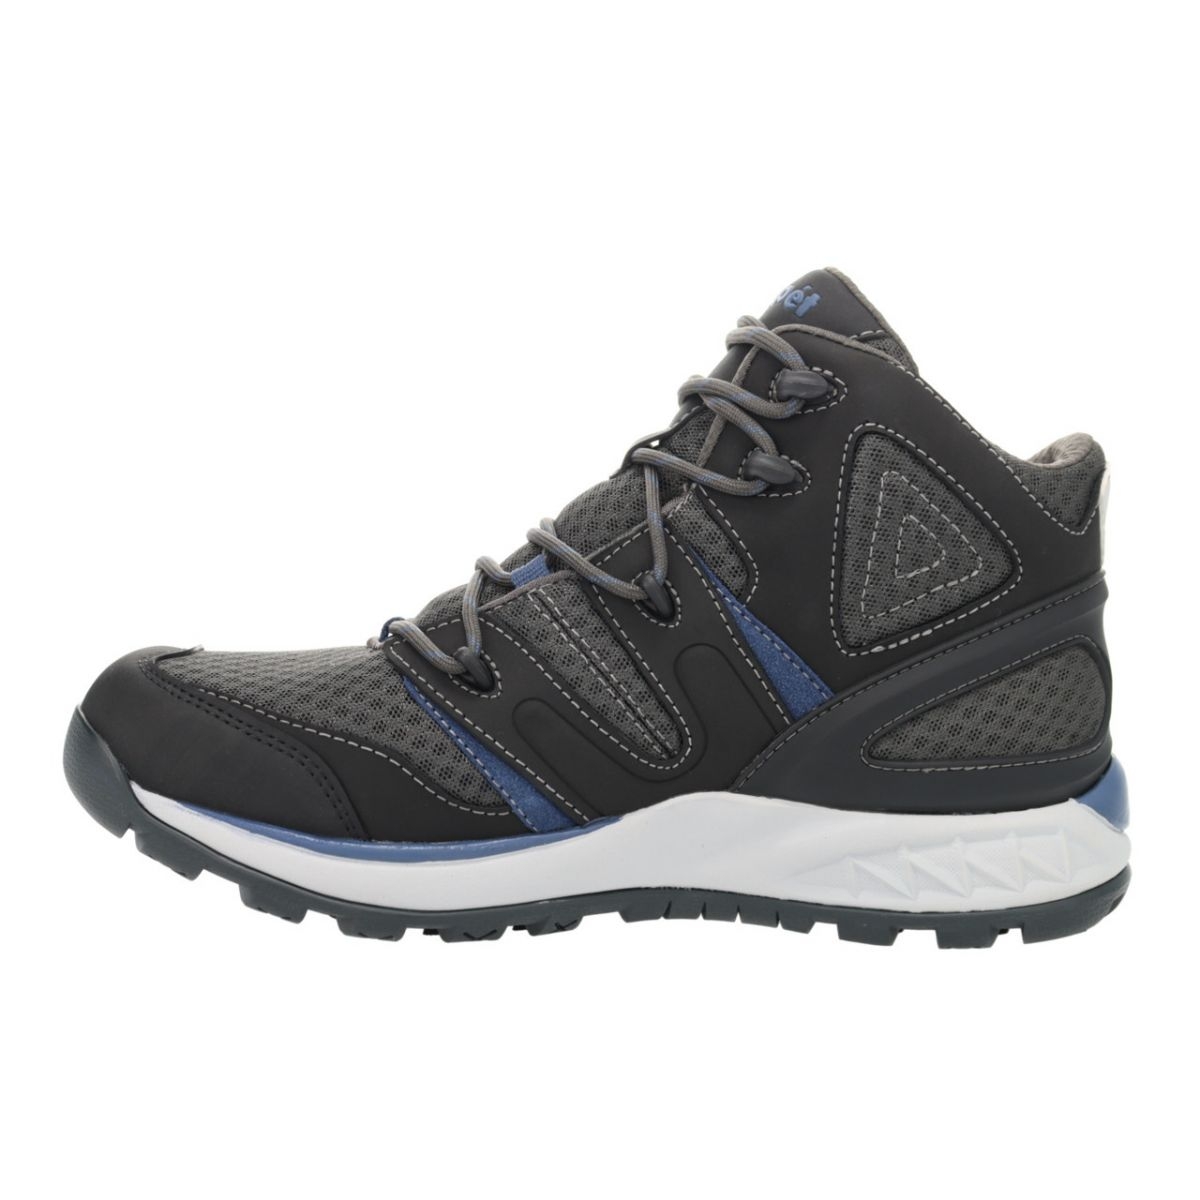 Propet Men's Veymont Waterproof Hiking Boot Grey/Blue - MOA022SGRB GREY/BLUE - GREY/BLUE, 11 X-Wide